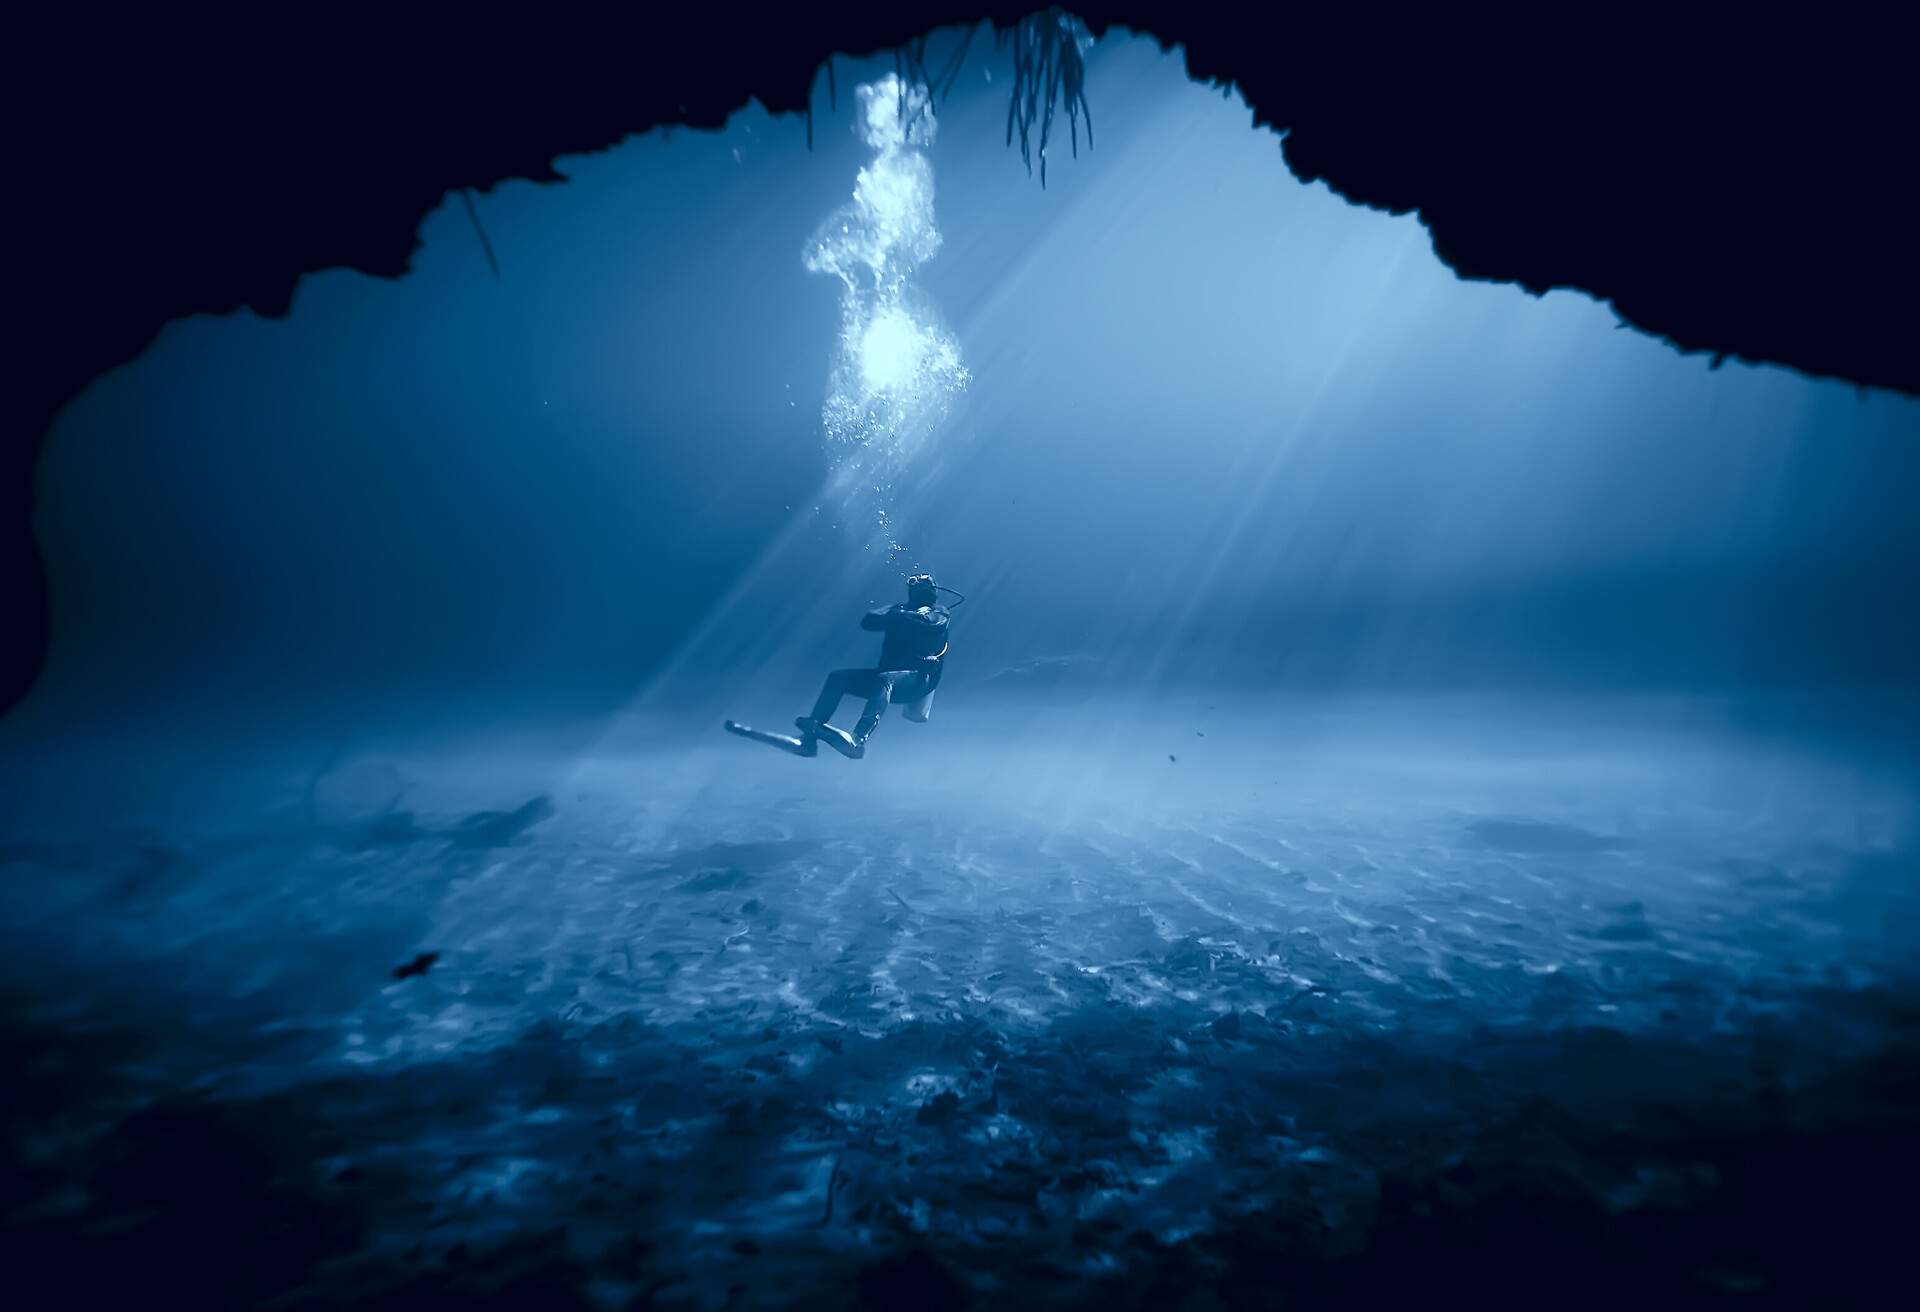 A diver breathes out bubbles under deep blue waters.